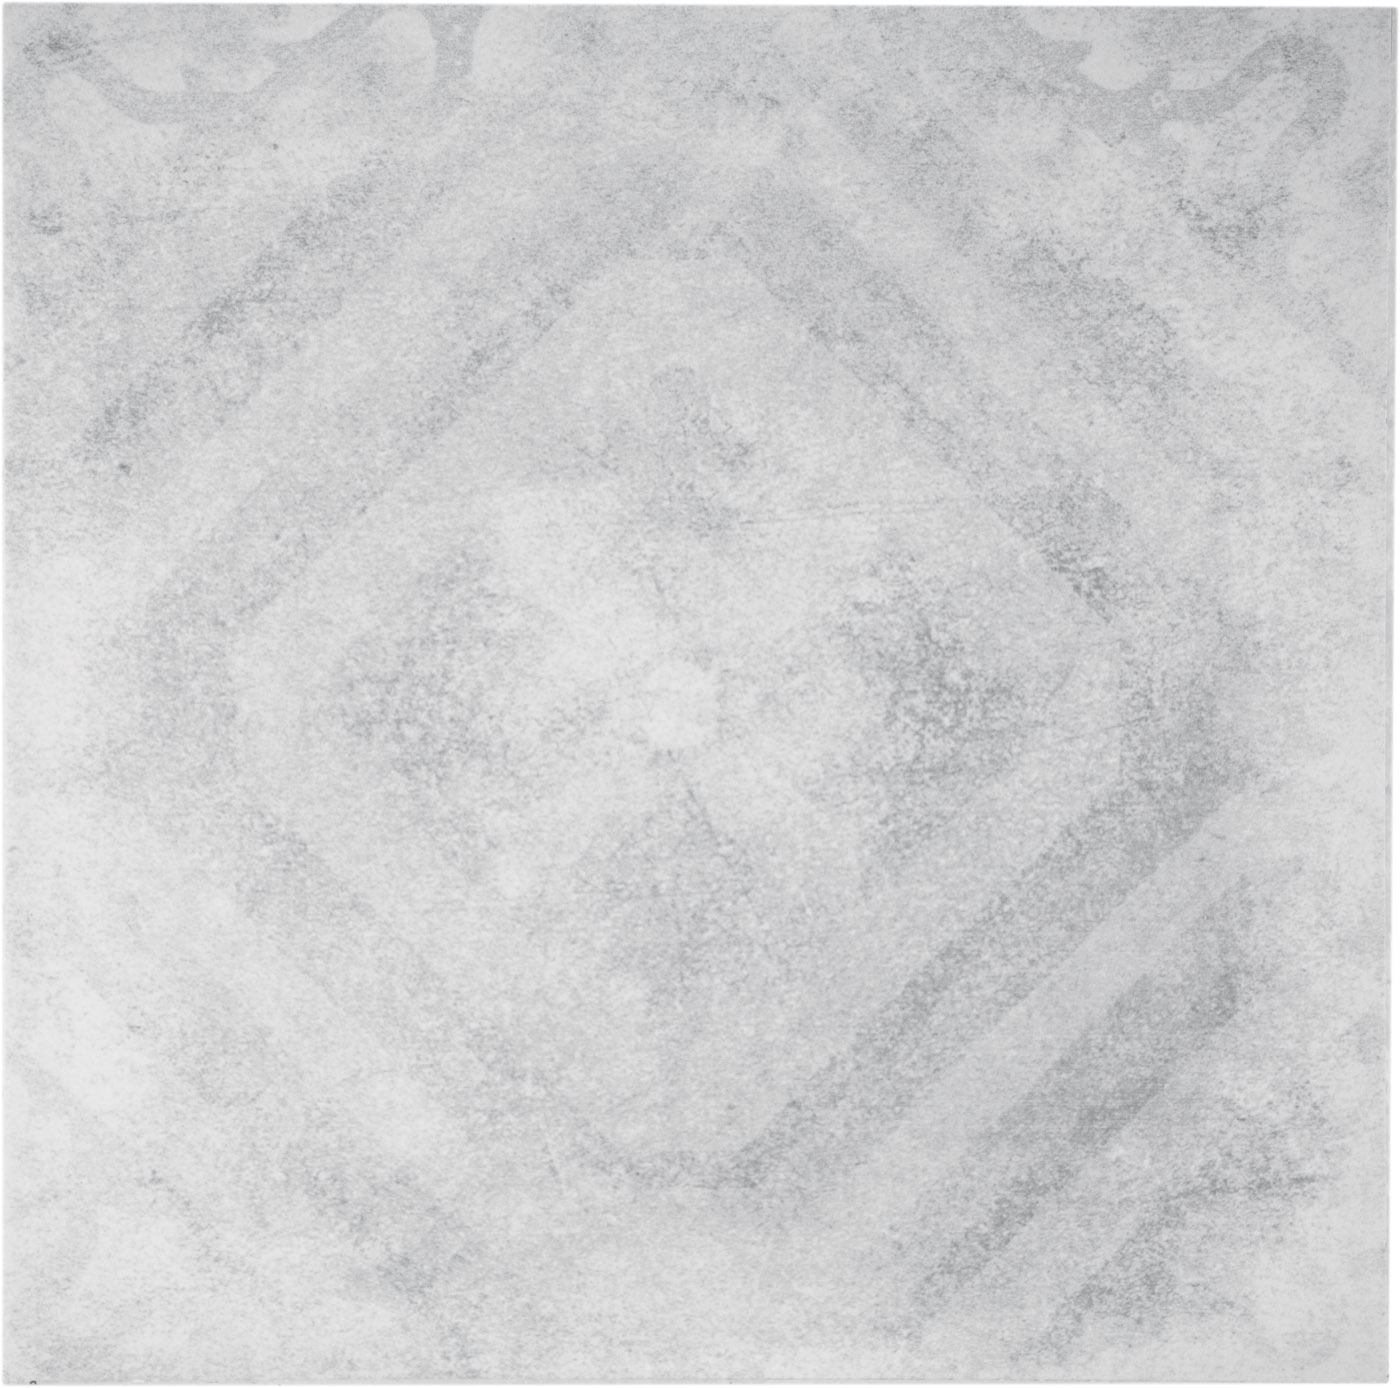 Bodenfliese,Wandfliese Terratinta Betonepoque White – Grey Matt White – Grey TTBEWG05N matt 20x20cm Dekor Louise 05 10mm